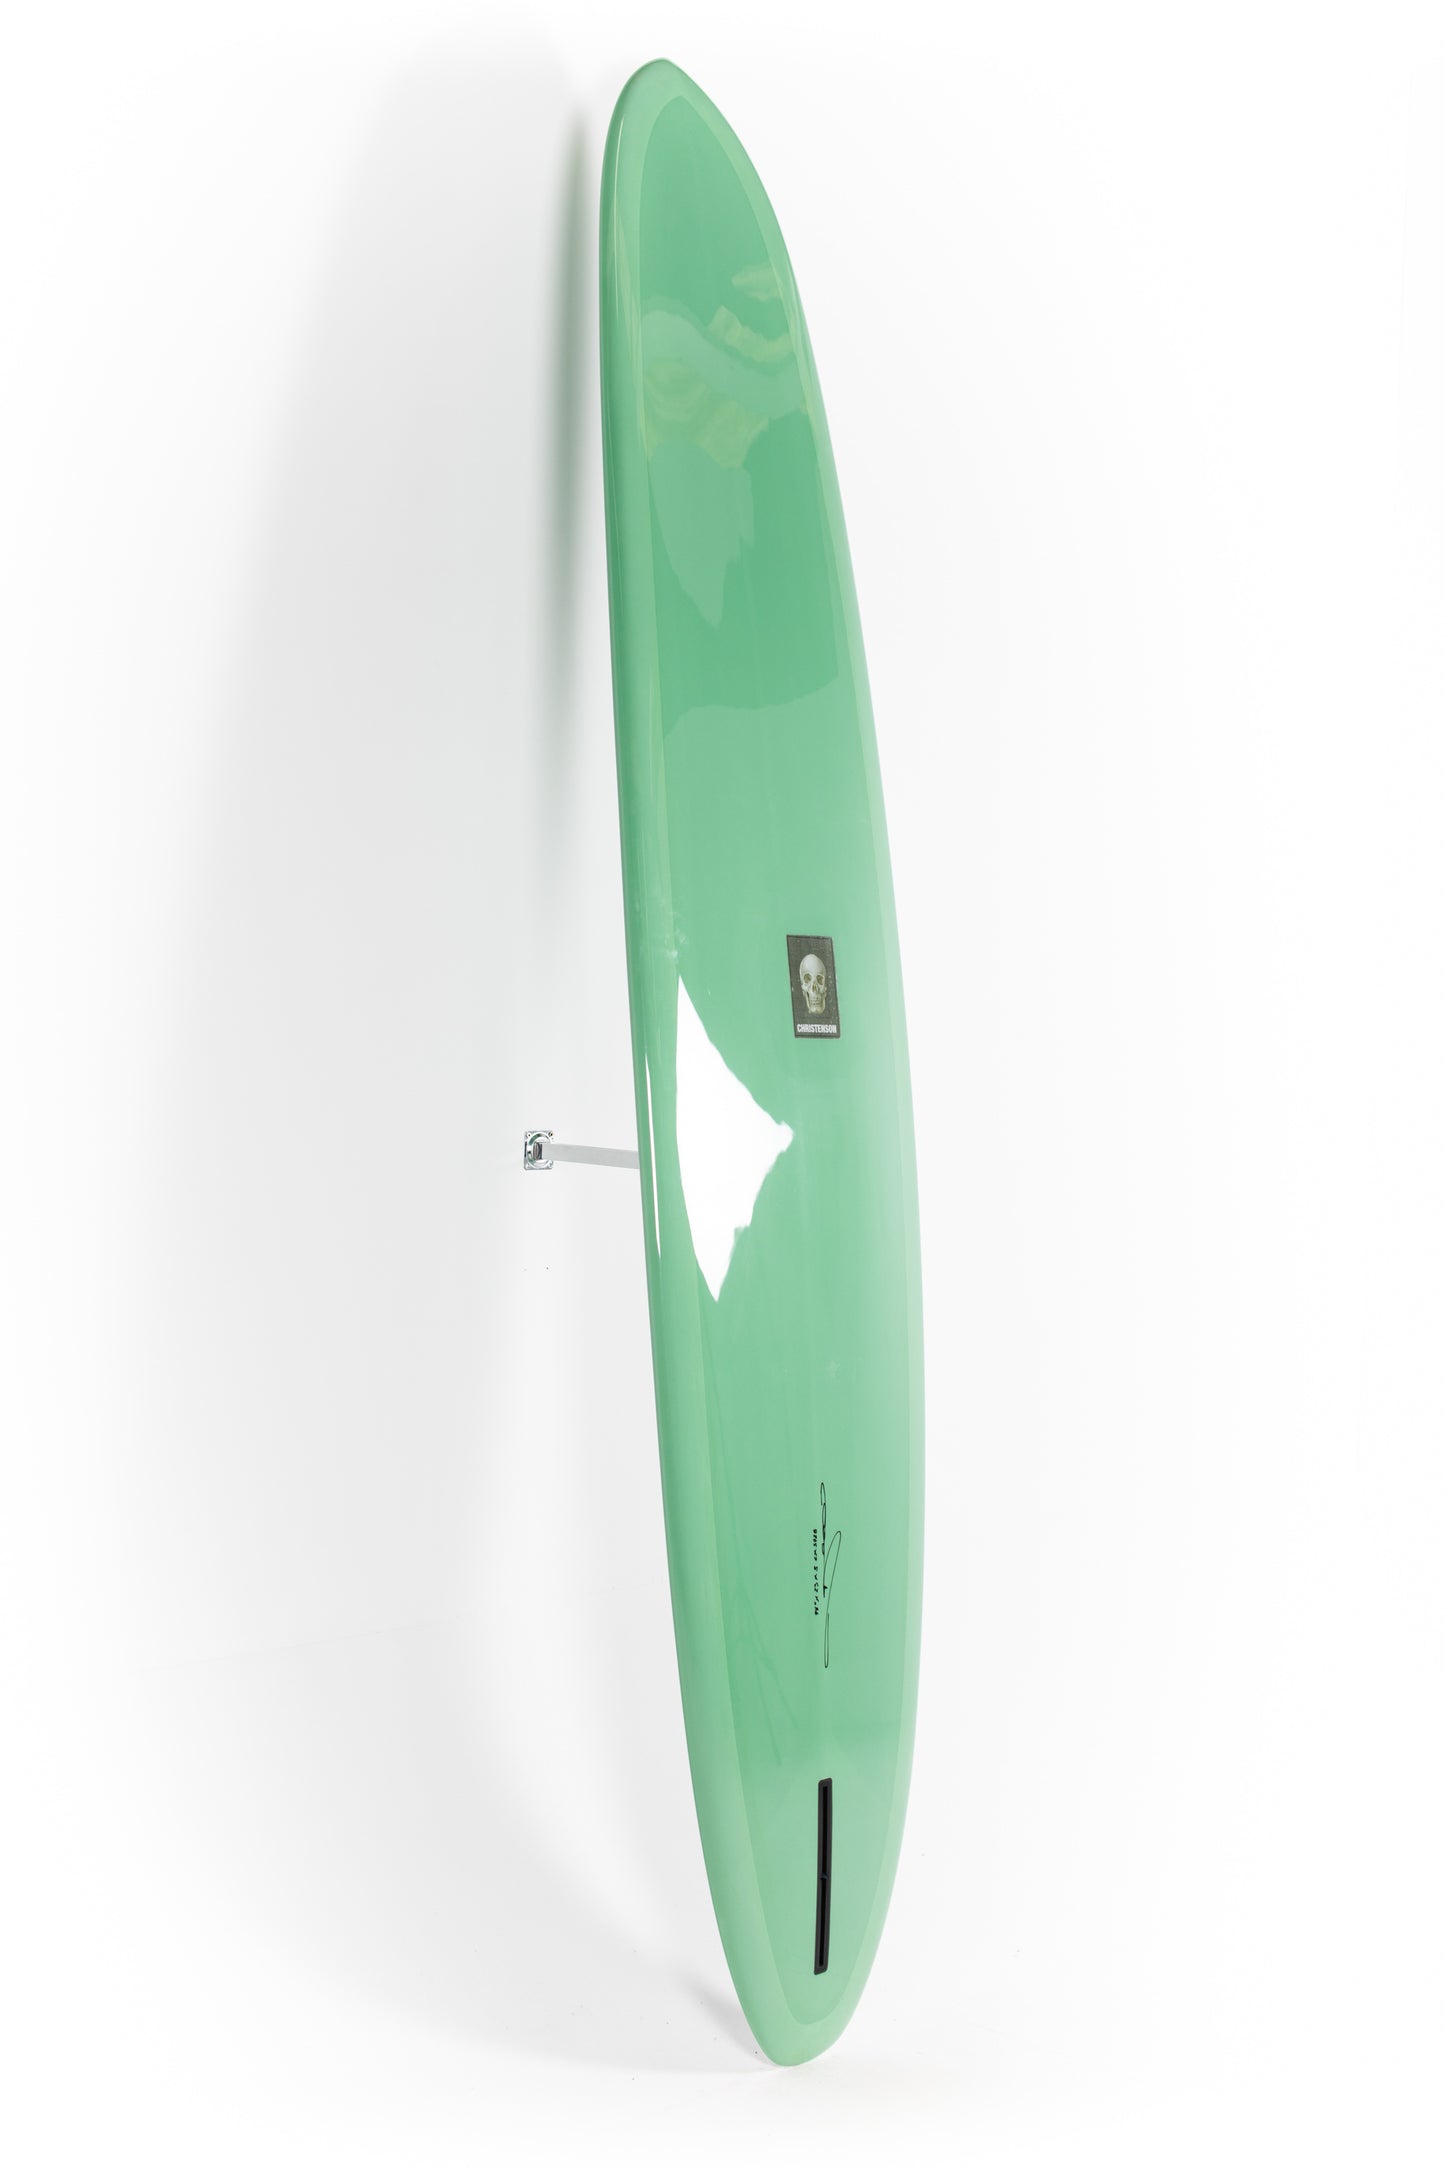 
                  
                    Pukas Surf Shop - Christenson Surfboard  - BANDITO by Chris Christenson - 9'6” x 23 x 3 - CX03428
                  
                